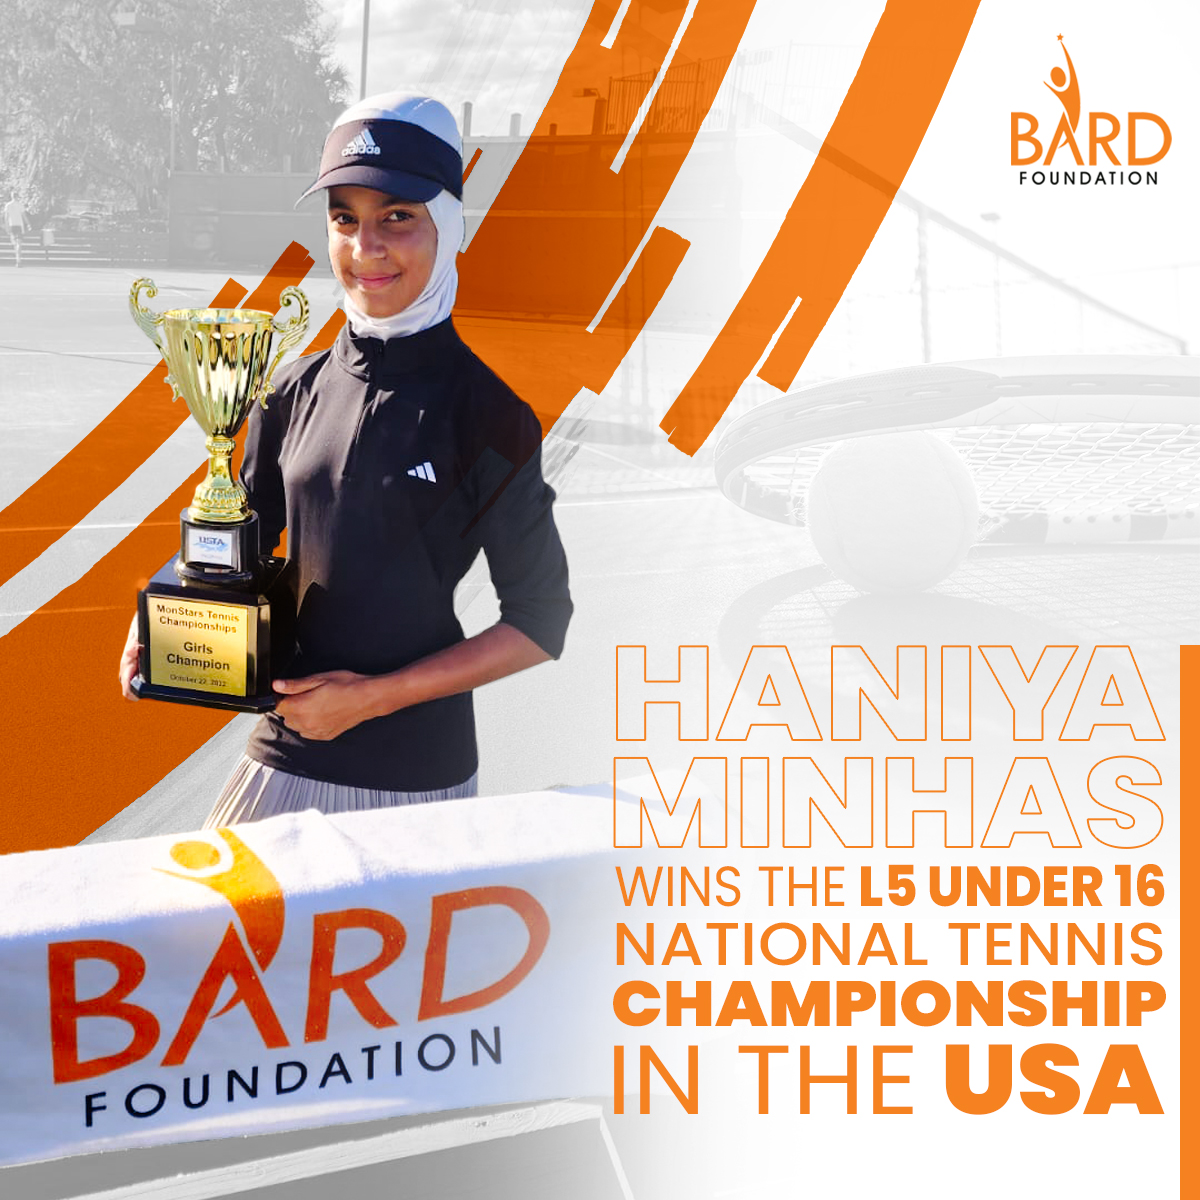 Haniya Minhas won the L5 Under 16 National Tennis Championship in the United States